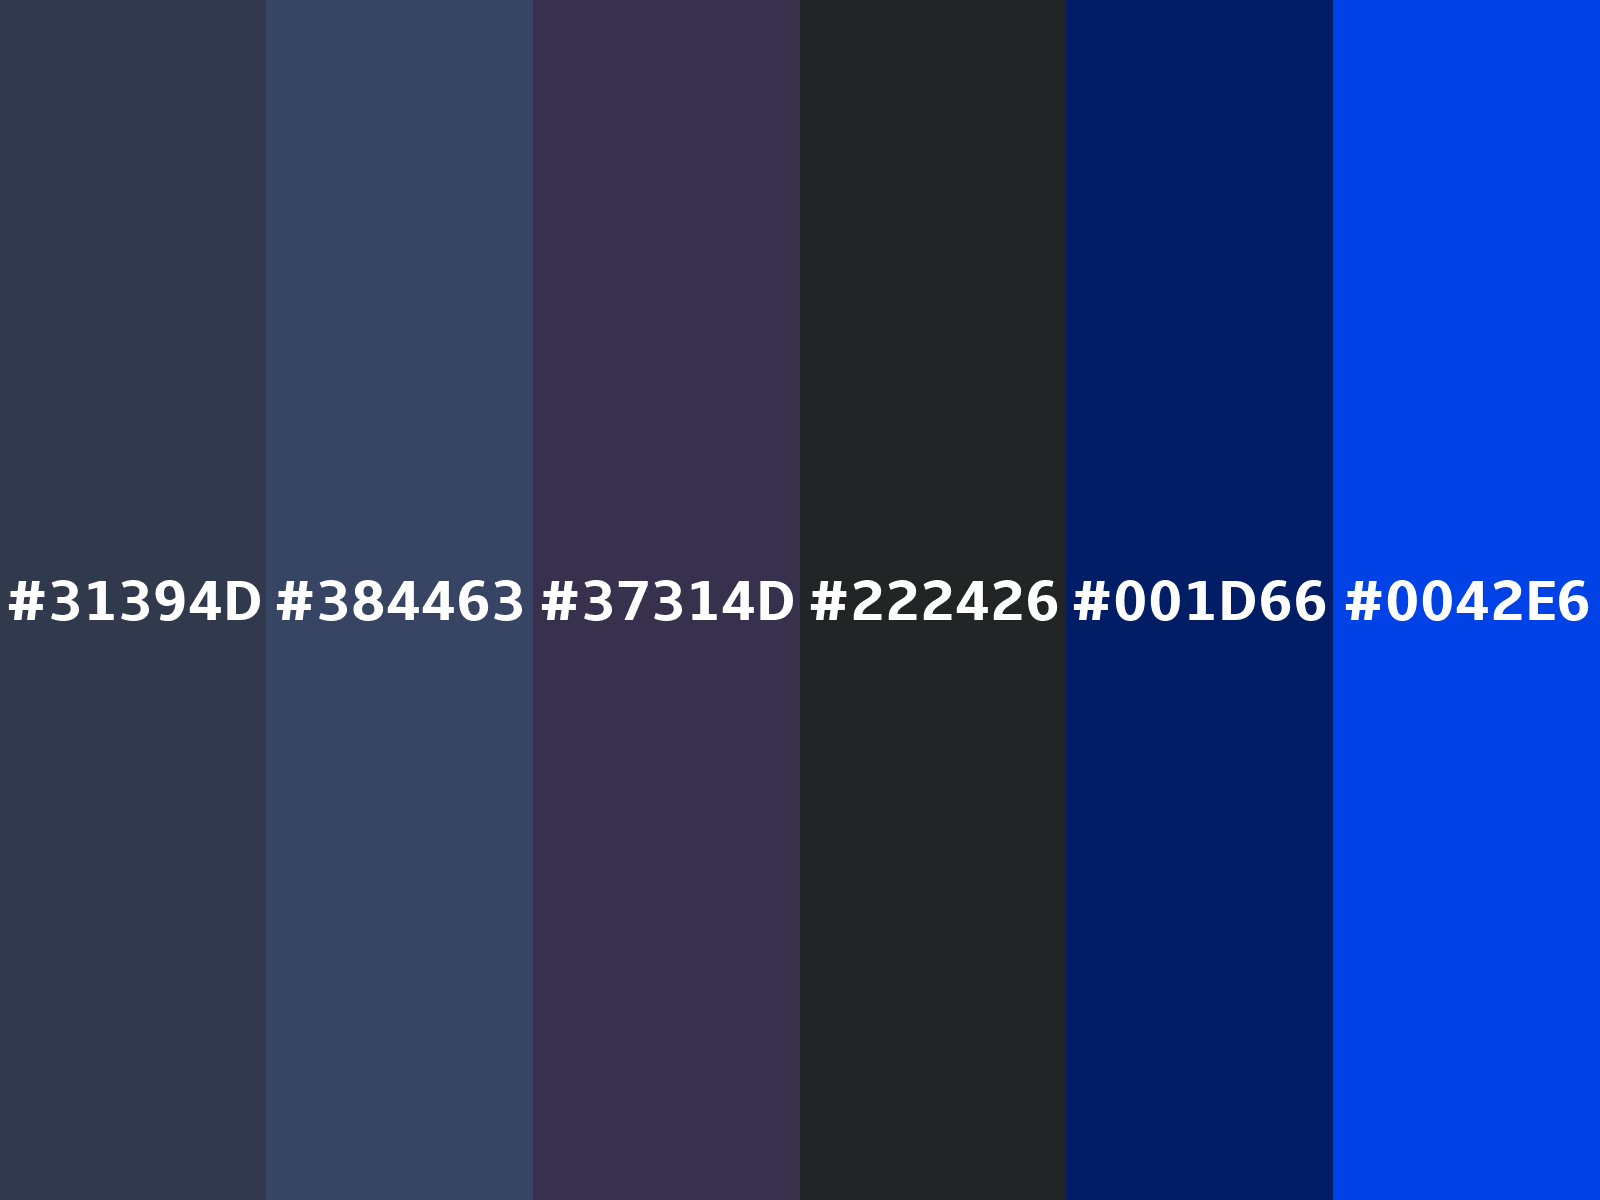 03394D Hex Color, RGB: 3, 57, 77